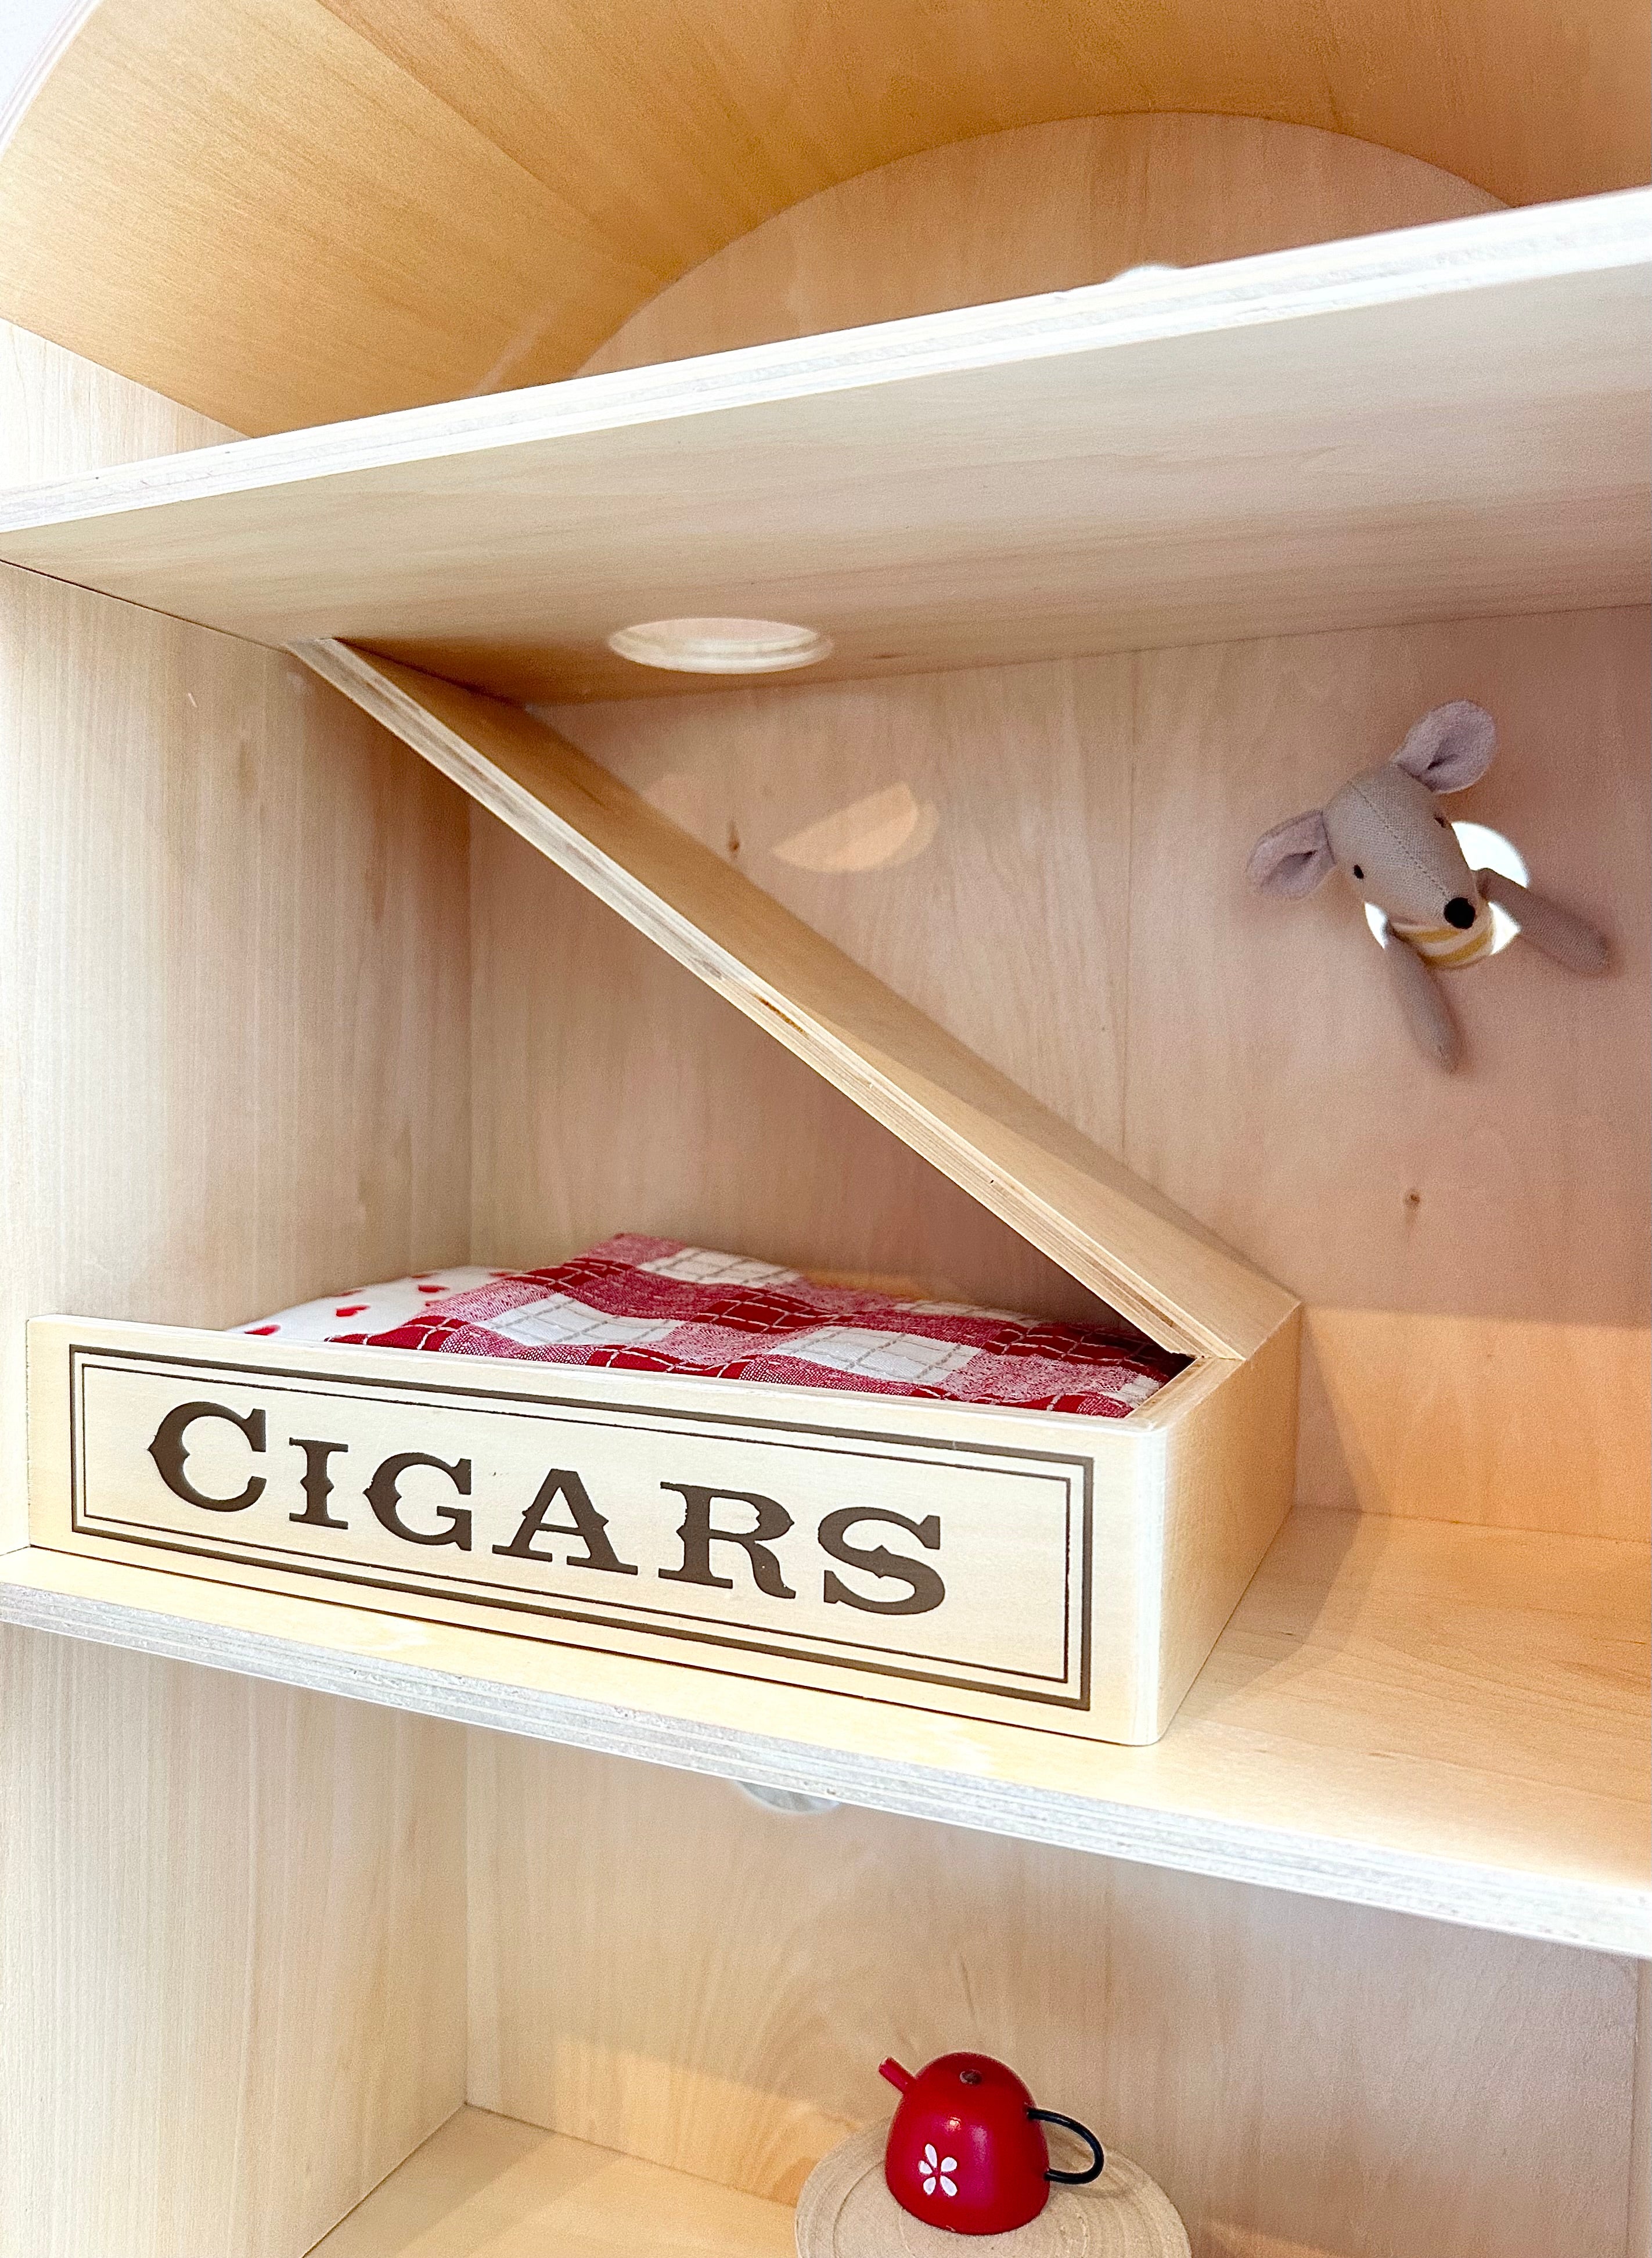 Cigar Mouse House - 2014